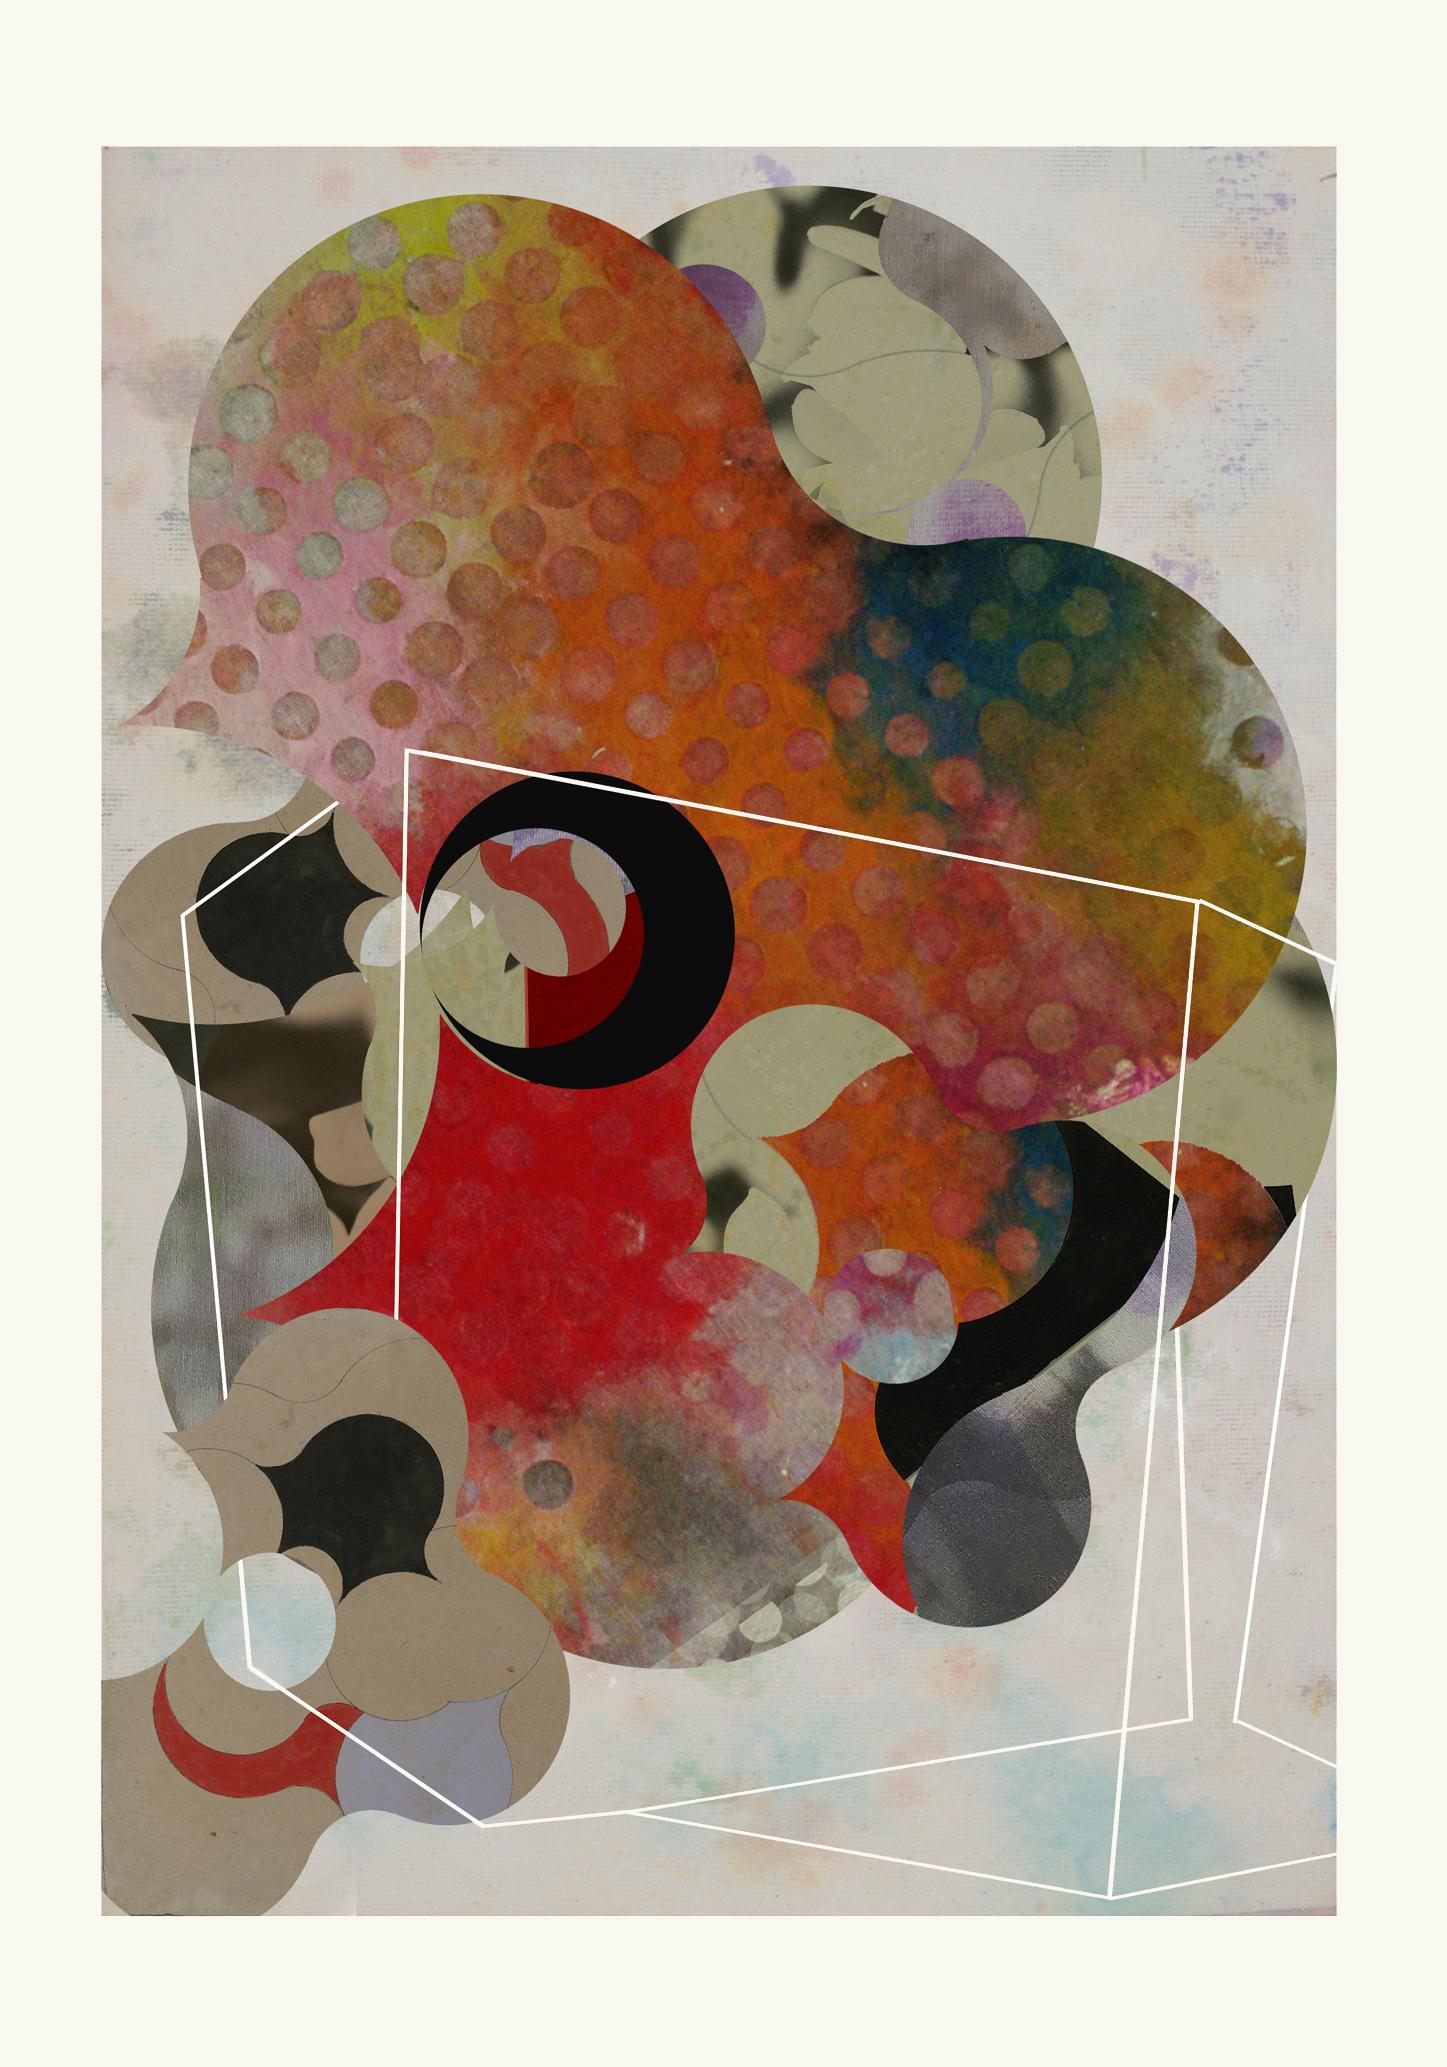 Francisco Nicolás Abstract Print – ST1pC01- Zeitgenössisch, Abstrakt, Gestal, Street Art, Pop Art, Moderne, Geometrisch